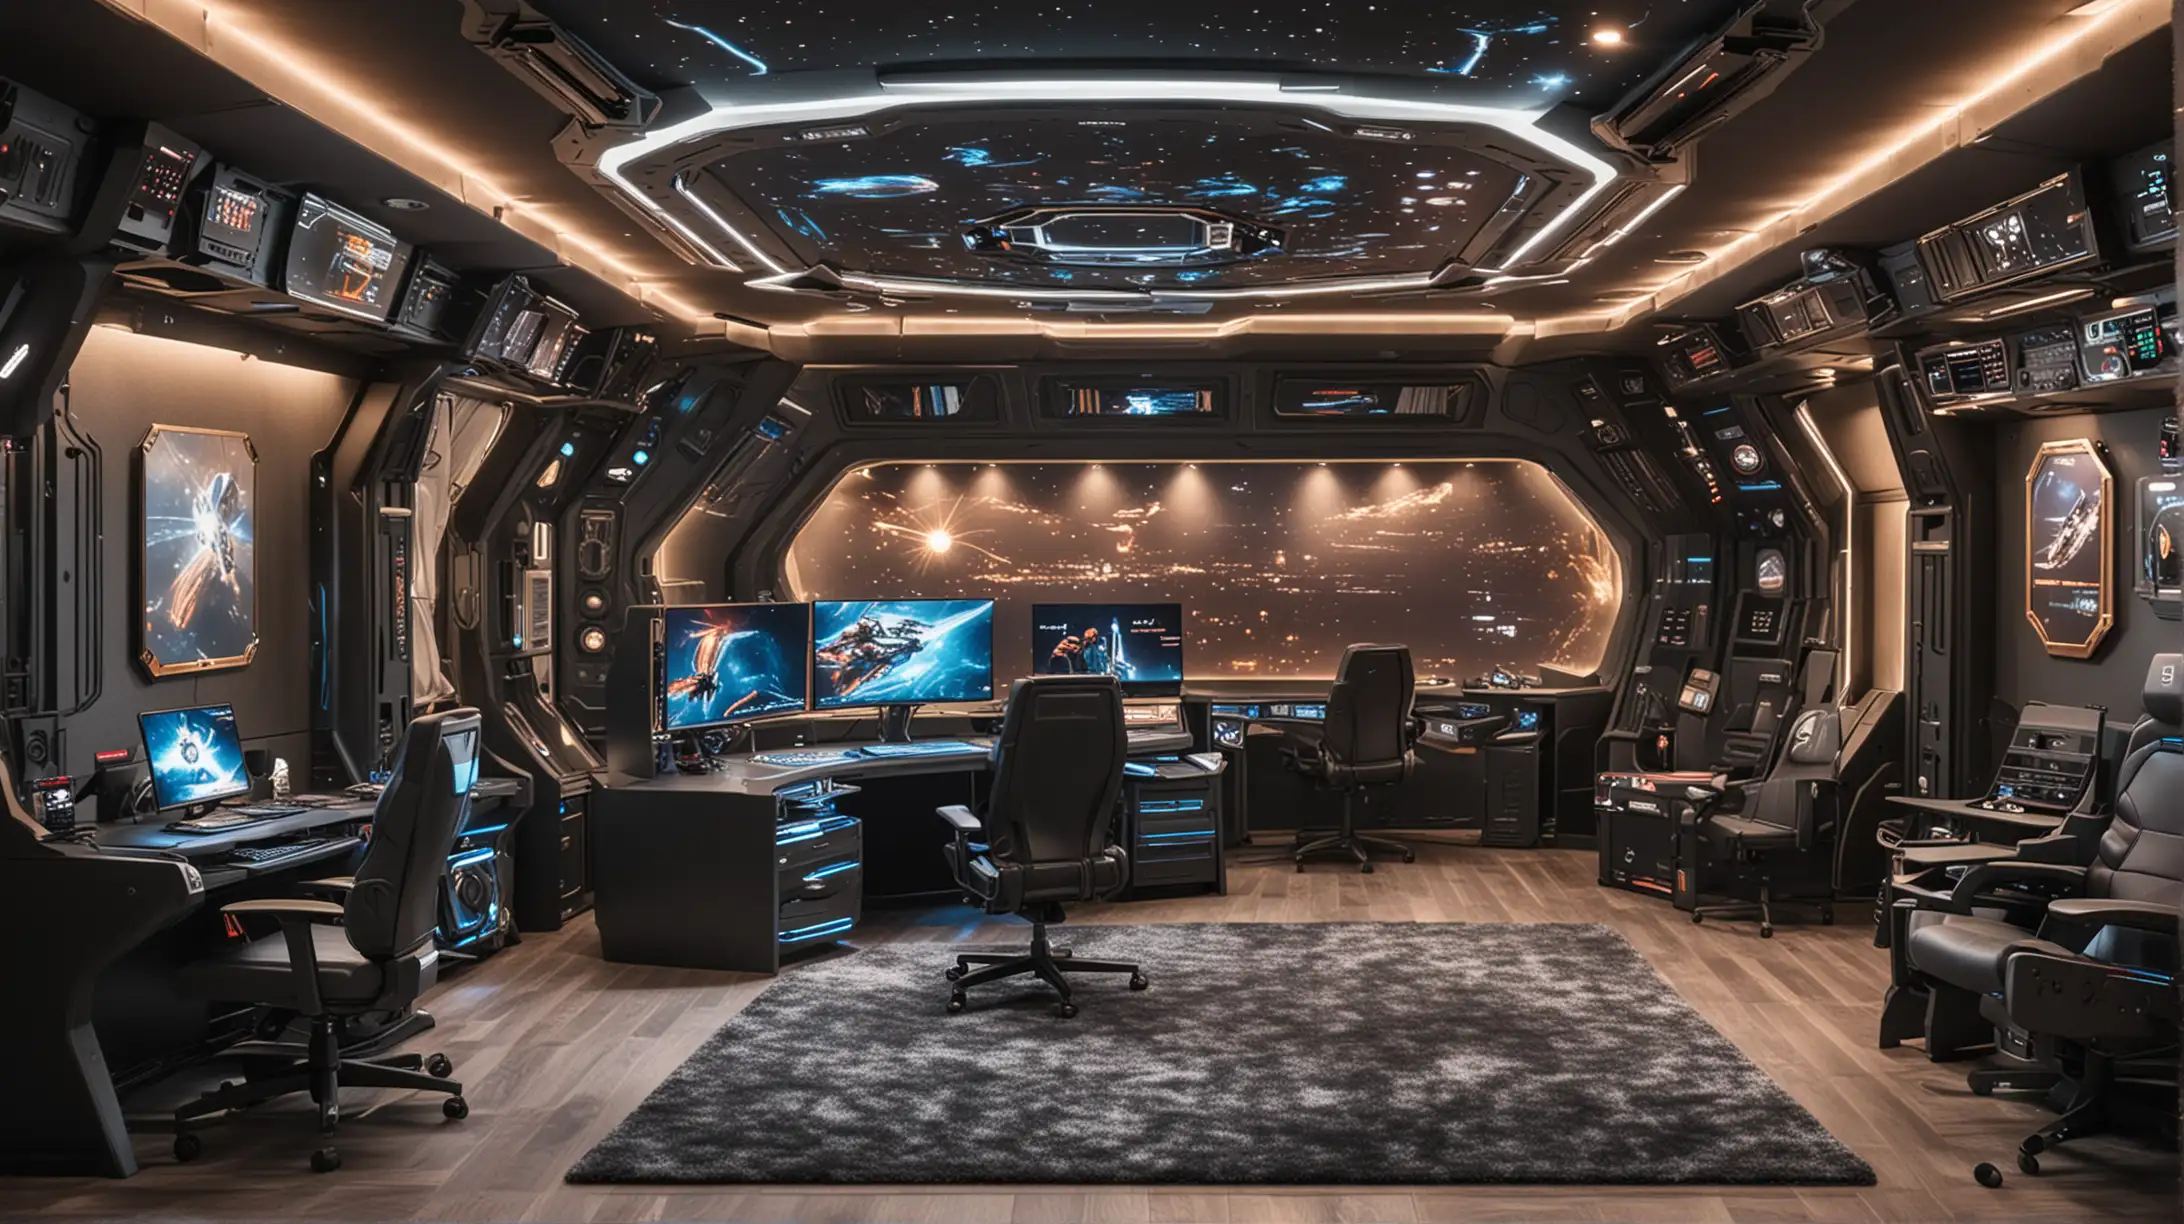 Elaborate spaceship interior-like gaming computer desk setup and playroom design